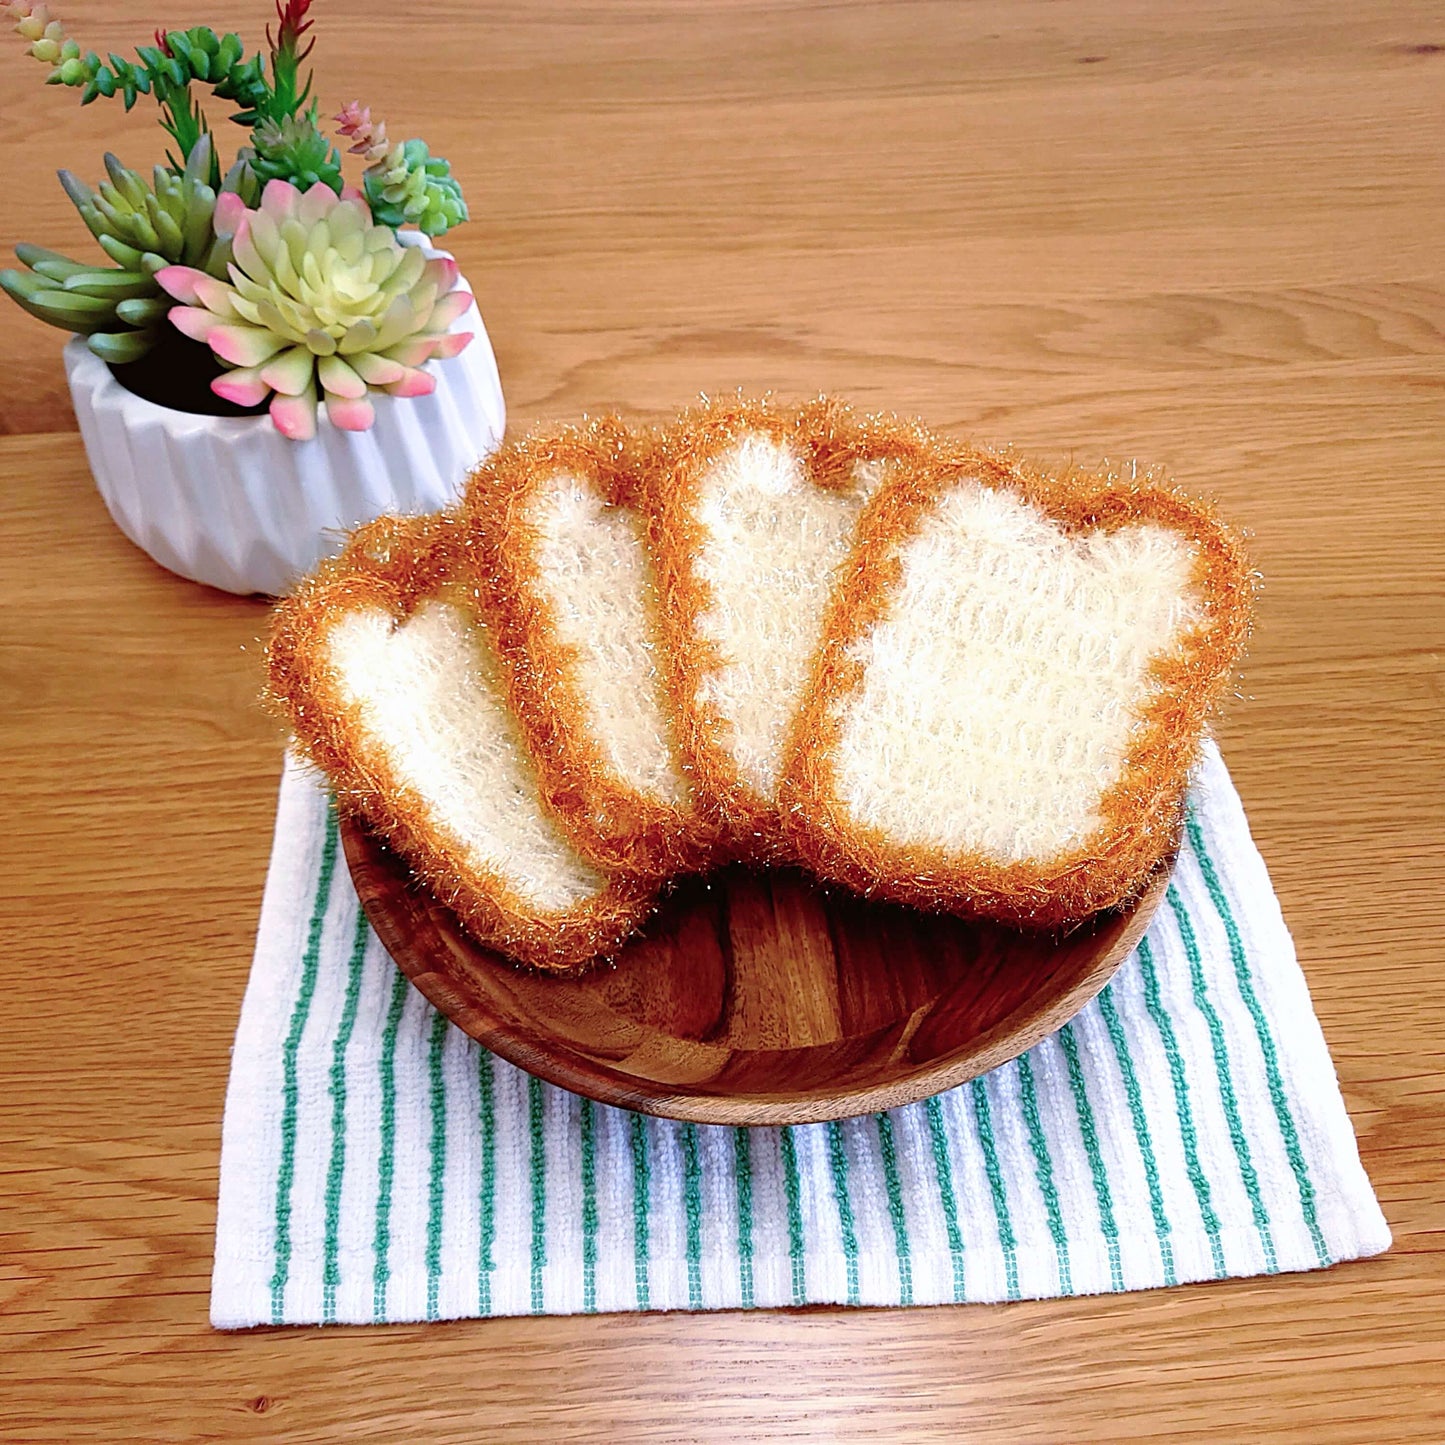 2 pack Cute funny whimsical toast bread dish sponge scrub scrubbing brush |  boho minimalist kitchen decor kid gift mom her